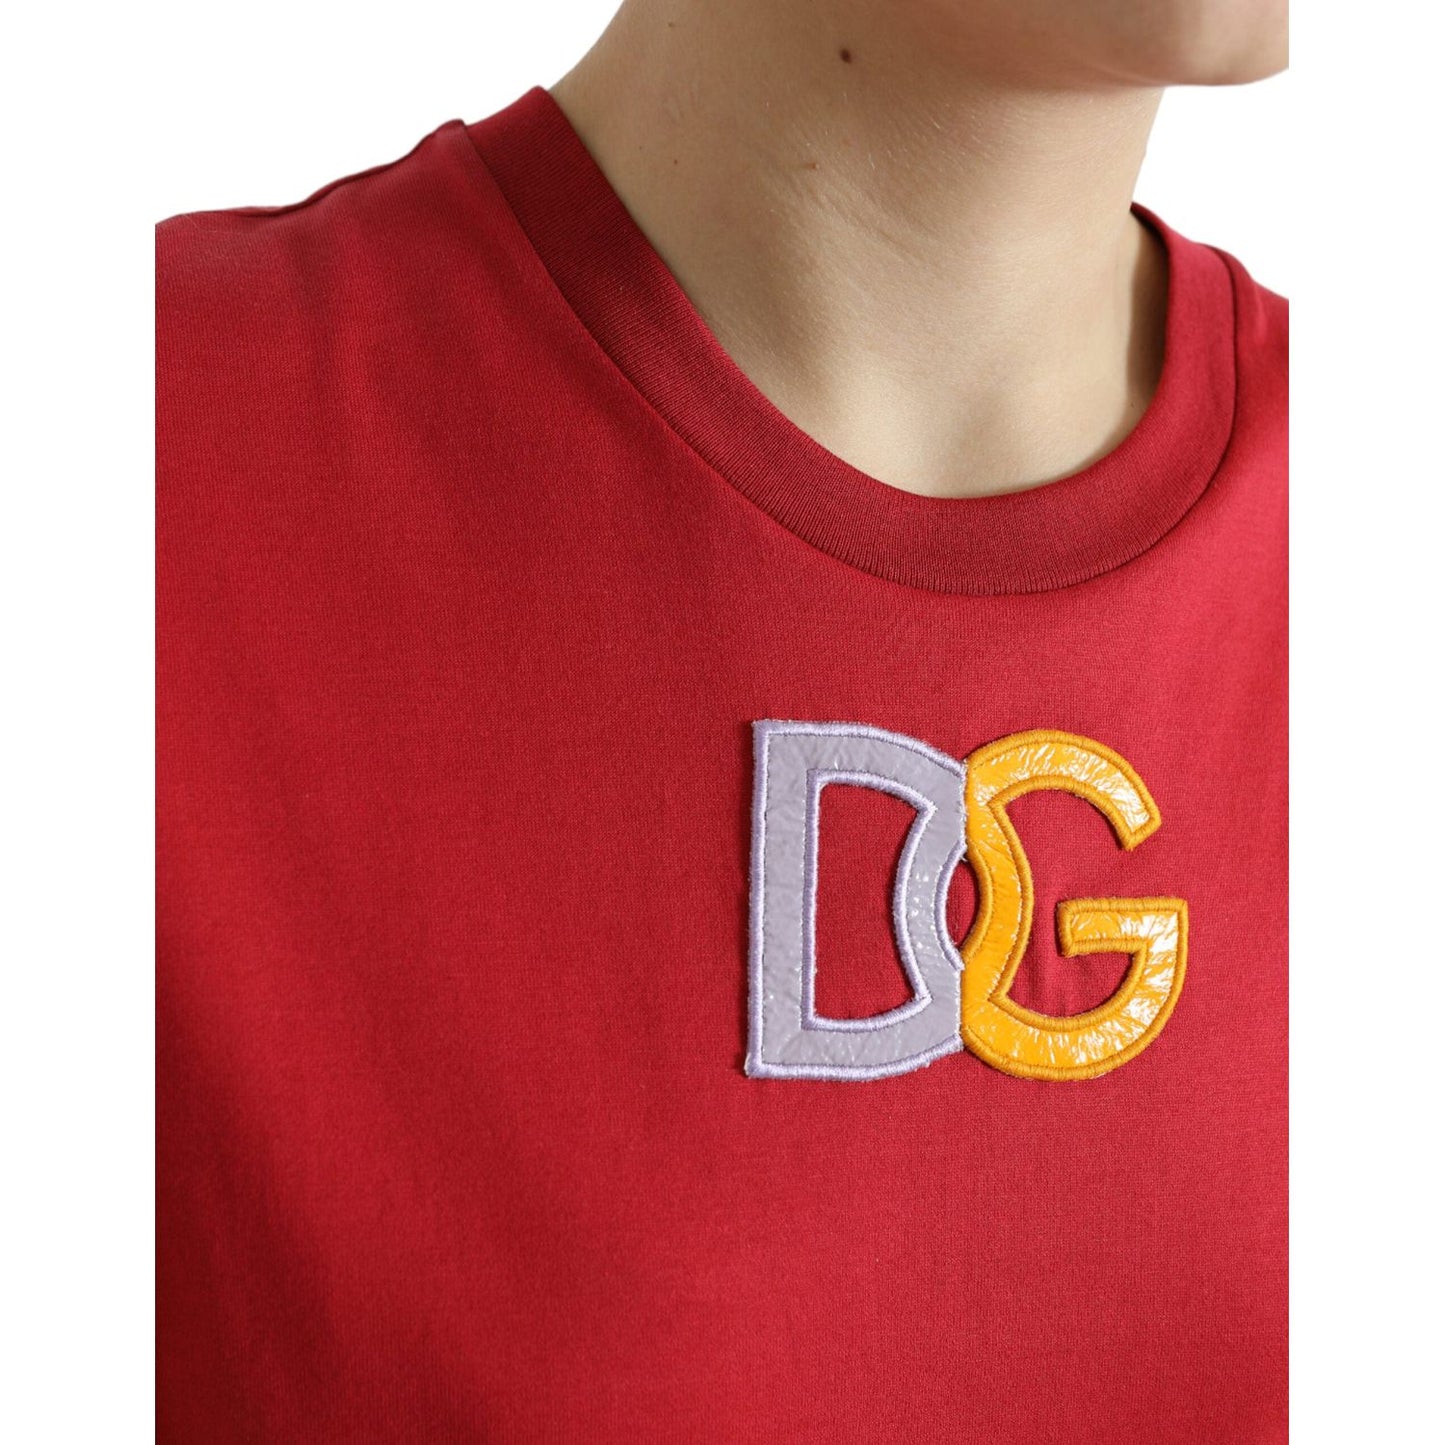 Dolce & Gabbana Red Cotton DG Logo Crew Neck Tank Top T-shirt red-cotton-dg-logo-crew-neck-tank-top-t-shirt 465A0926-BG-scaled-49733954-dc4.jpg